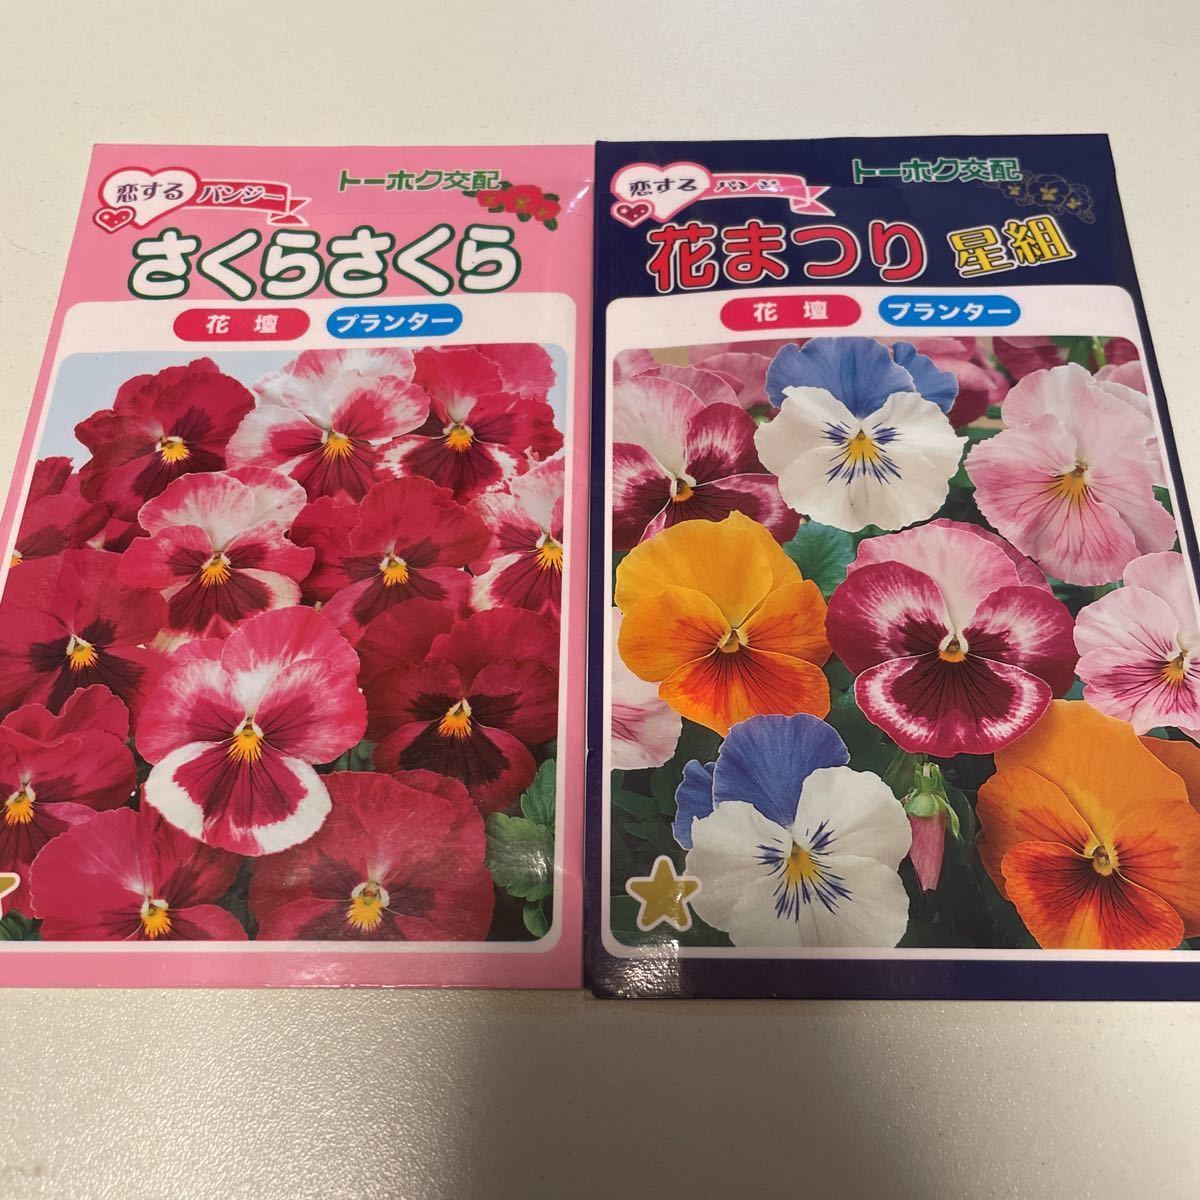  pansy. kind 30 bead set Sakura Sakura flower ... star collection color Mix to- ho k* kind sack less viola. kind 